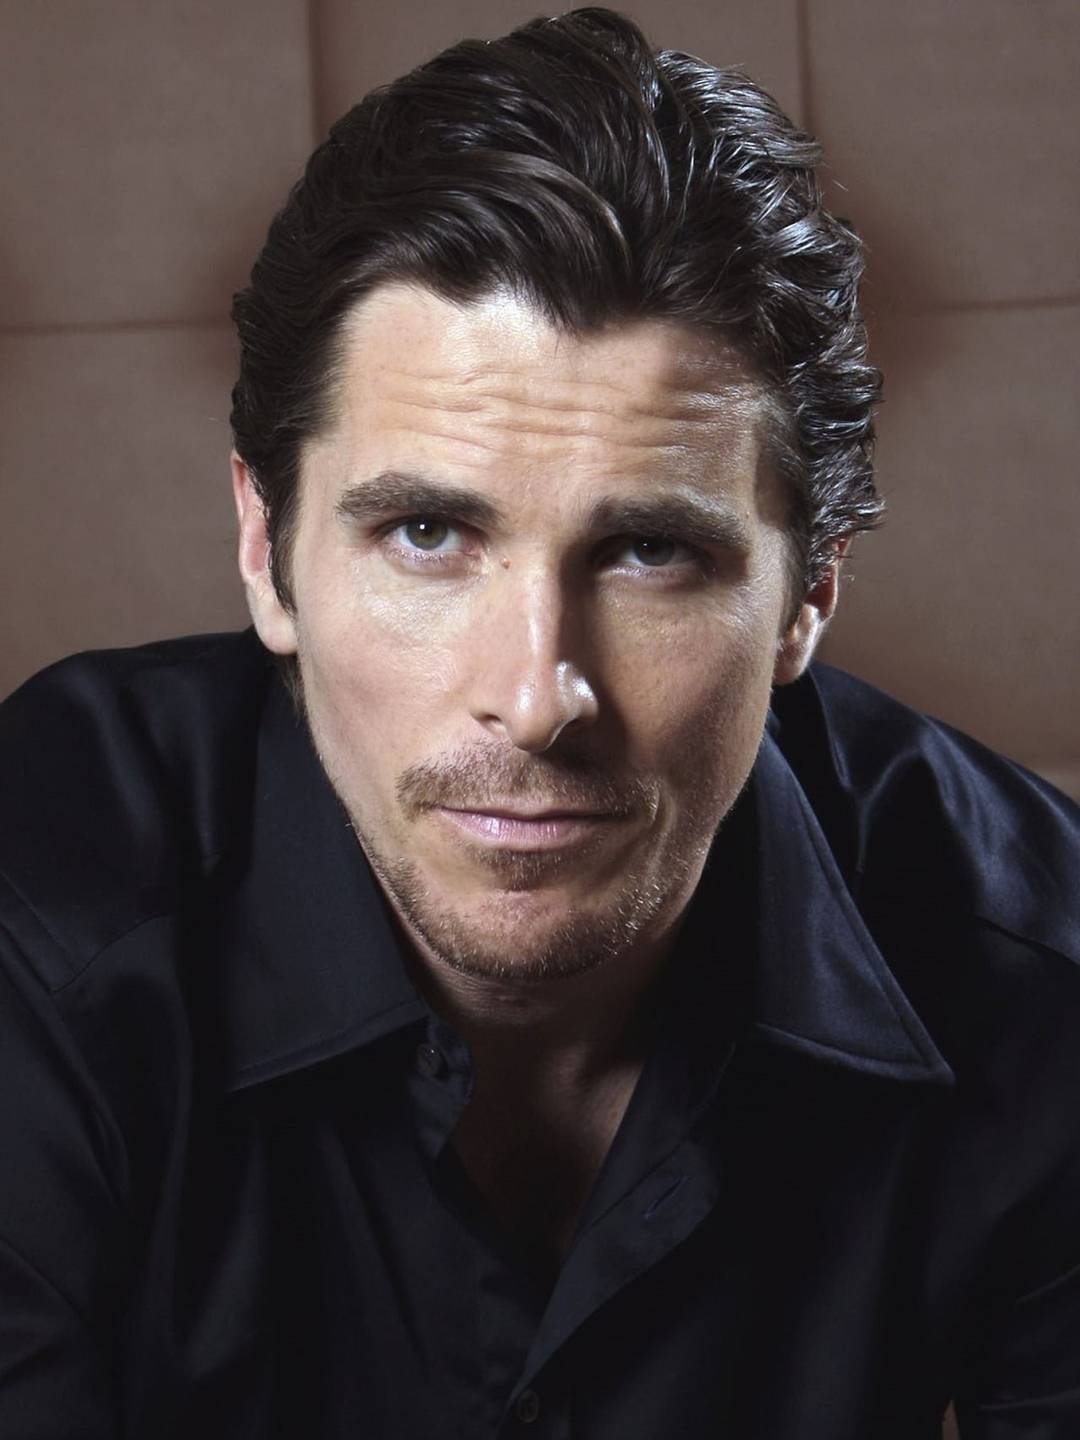 Christian Bale early career